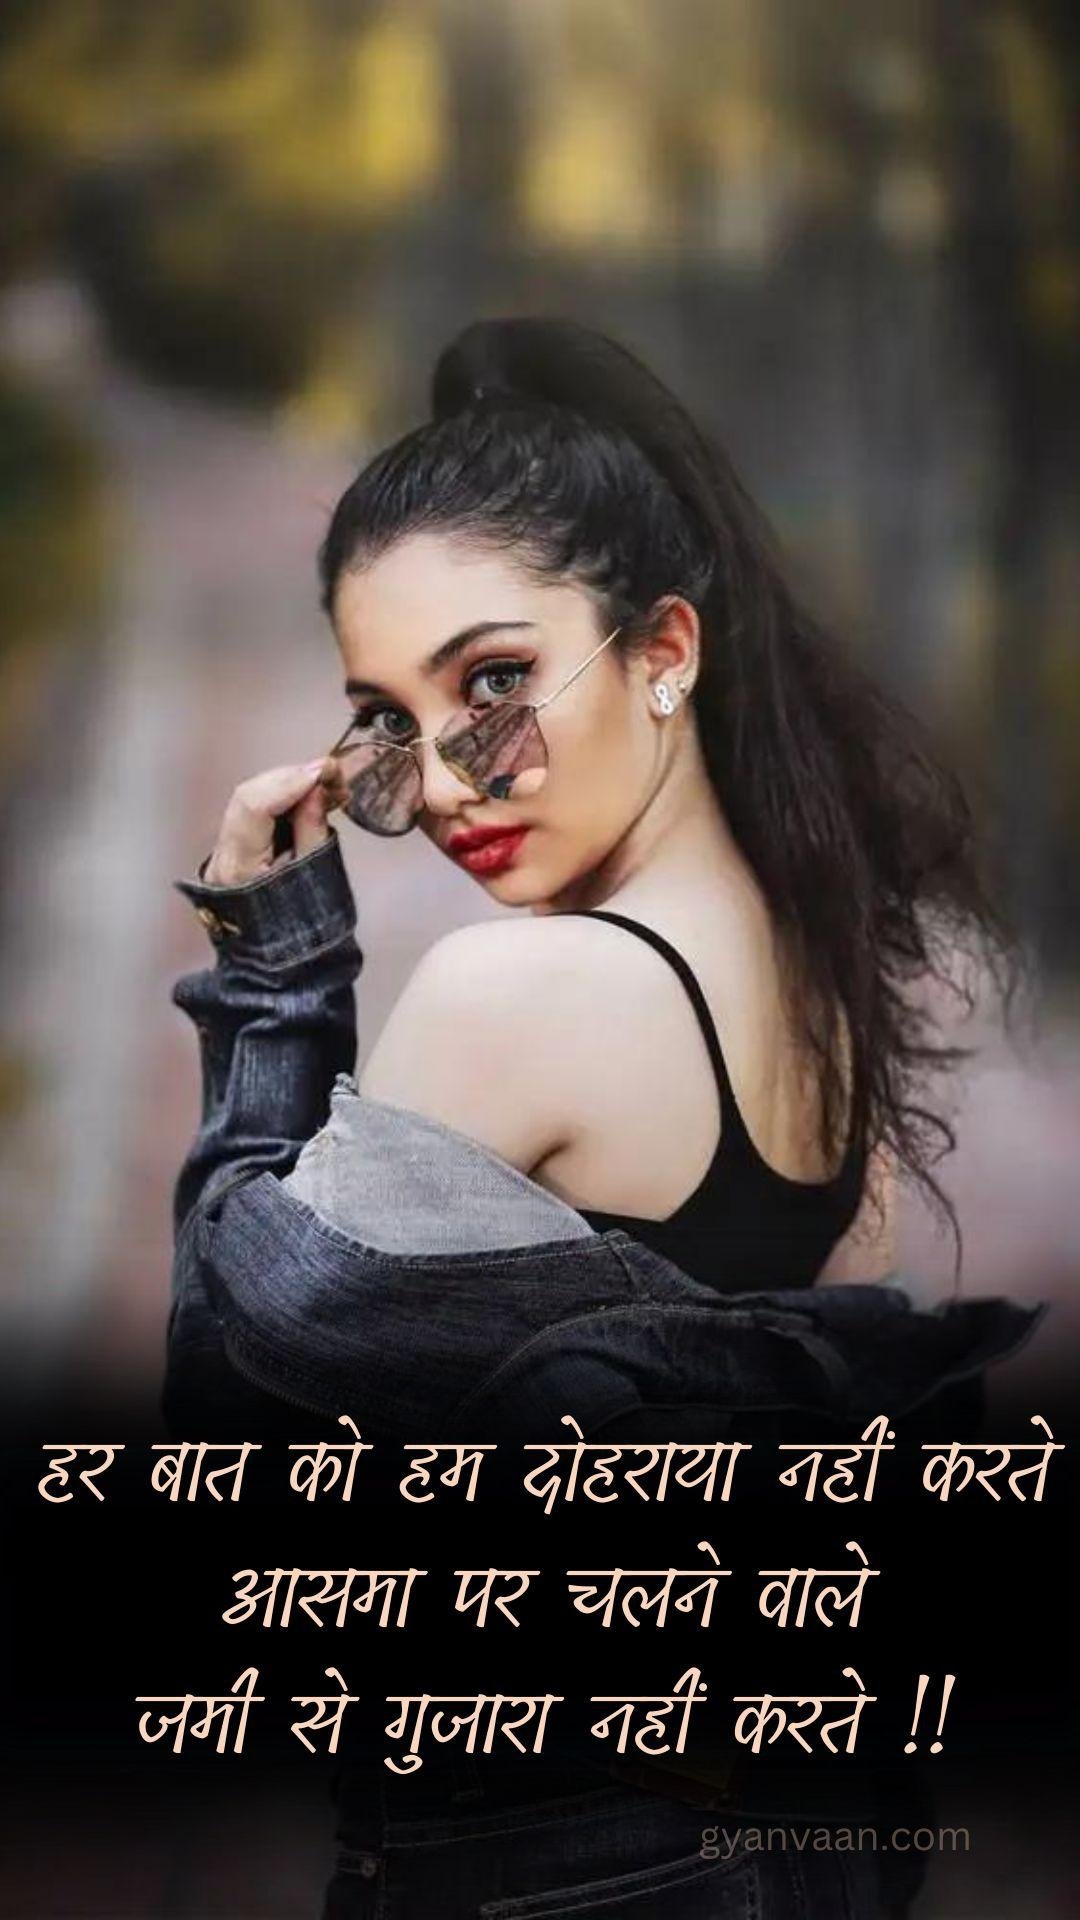 Attitude Status Attitude Quotes Attitude Shayari For Girl In Hindi Mobile 35 - Attitude Quotes For Girls